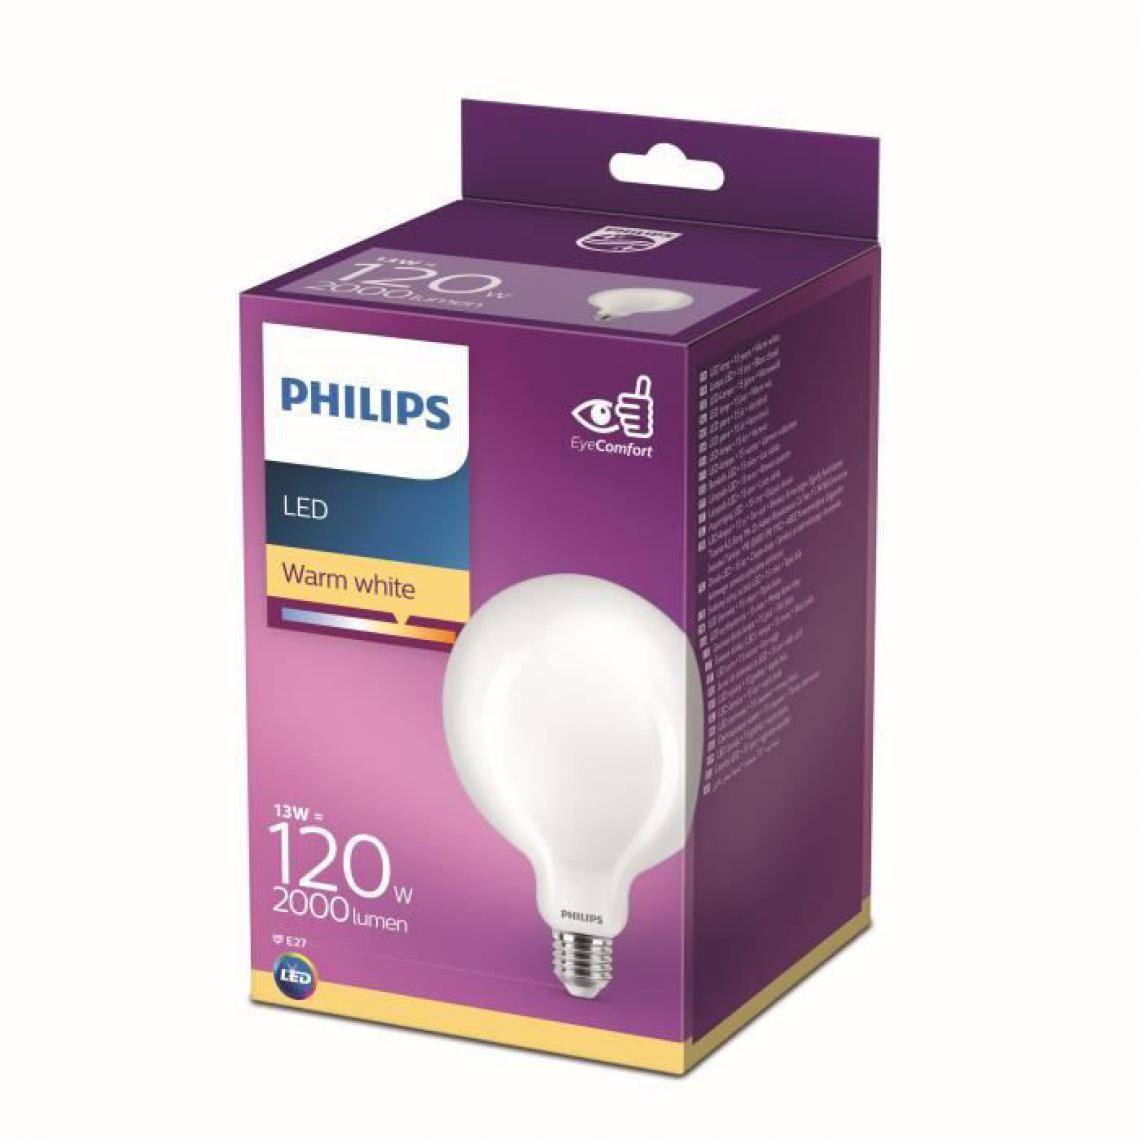 Philips - Philips ampoule LED LED 120W E27 Blanc chaud non dimmable, verre - Ampoules LED